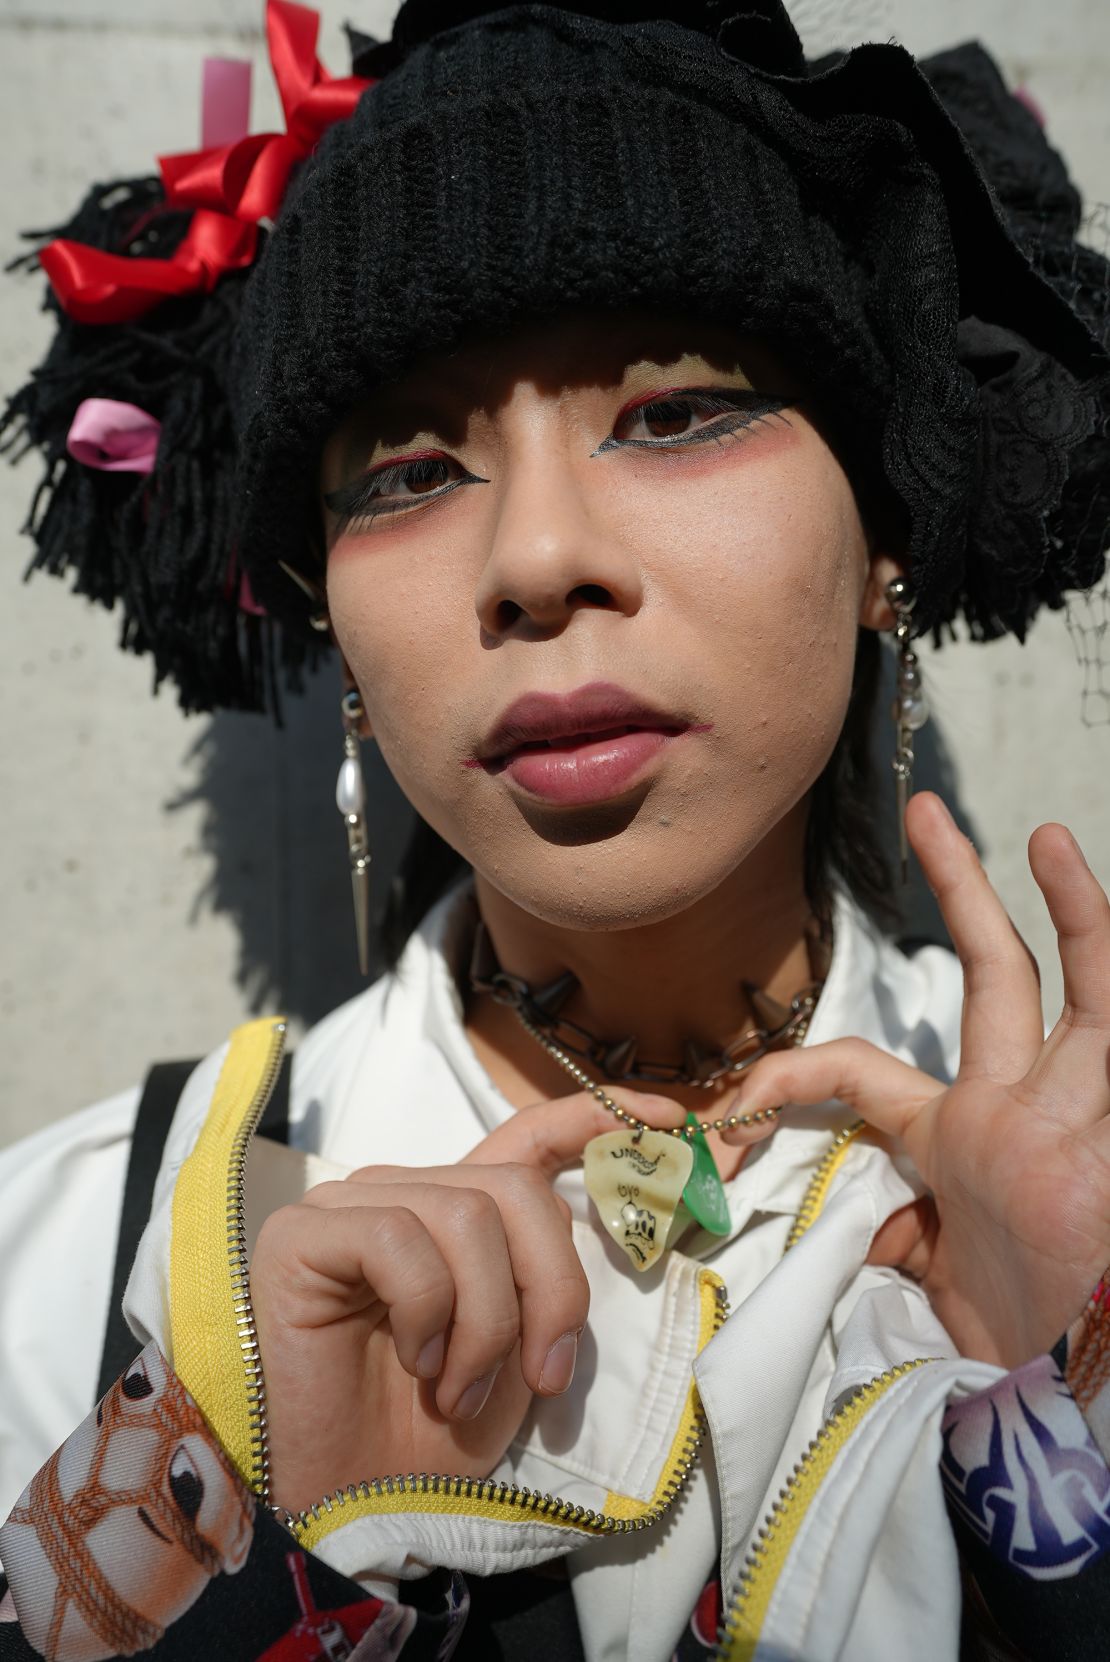 Ryu Kobayashi wore a Kidill jacket, Comme des Garçons skirt and Marc Jacobs bag. "I’m happy to see more punk fashion, little by little,” Kobayashi said.